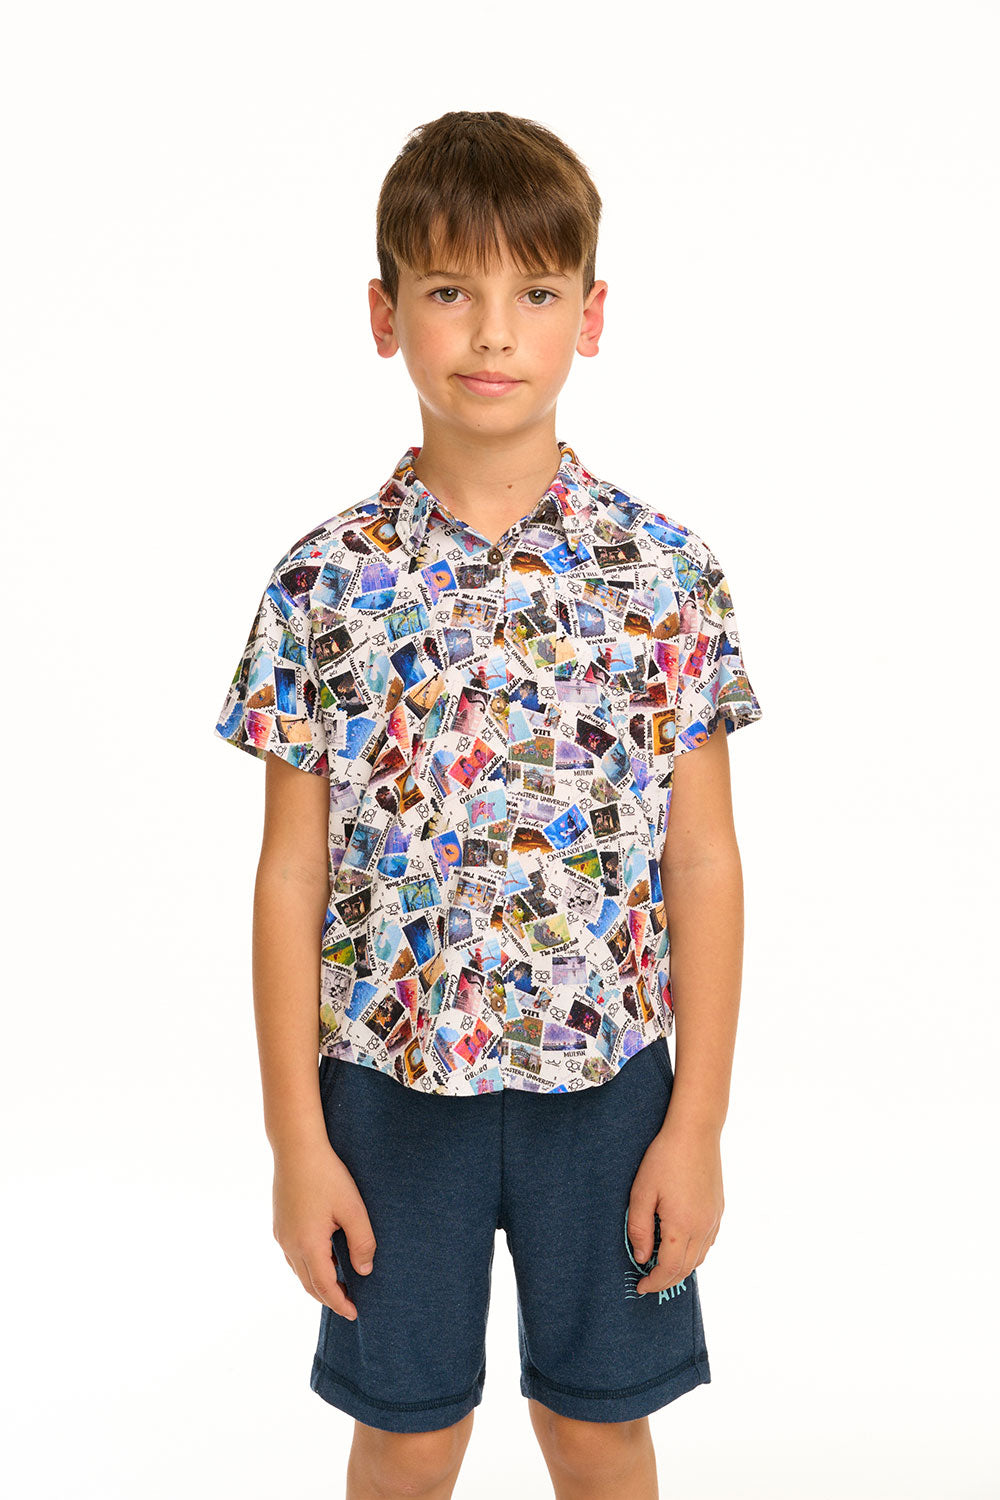 Disney 100 - Air Mail Button Down Shirt BOYS chaserbrand